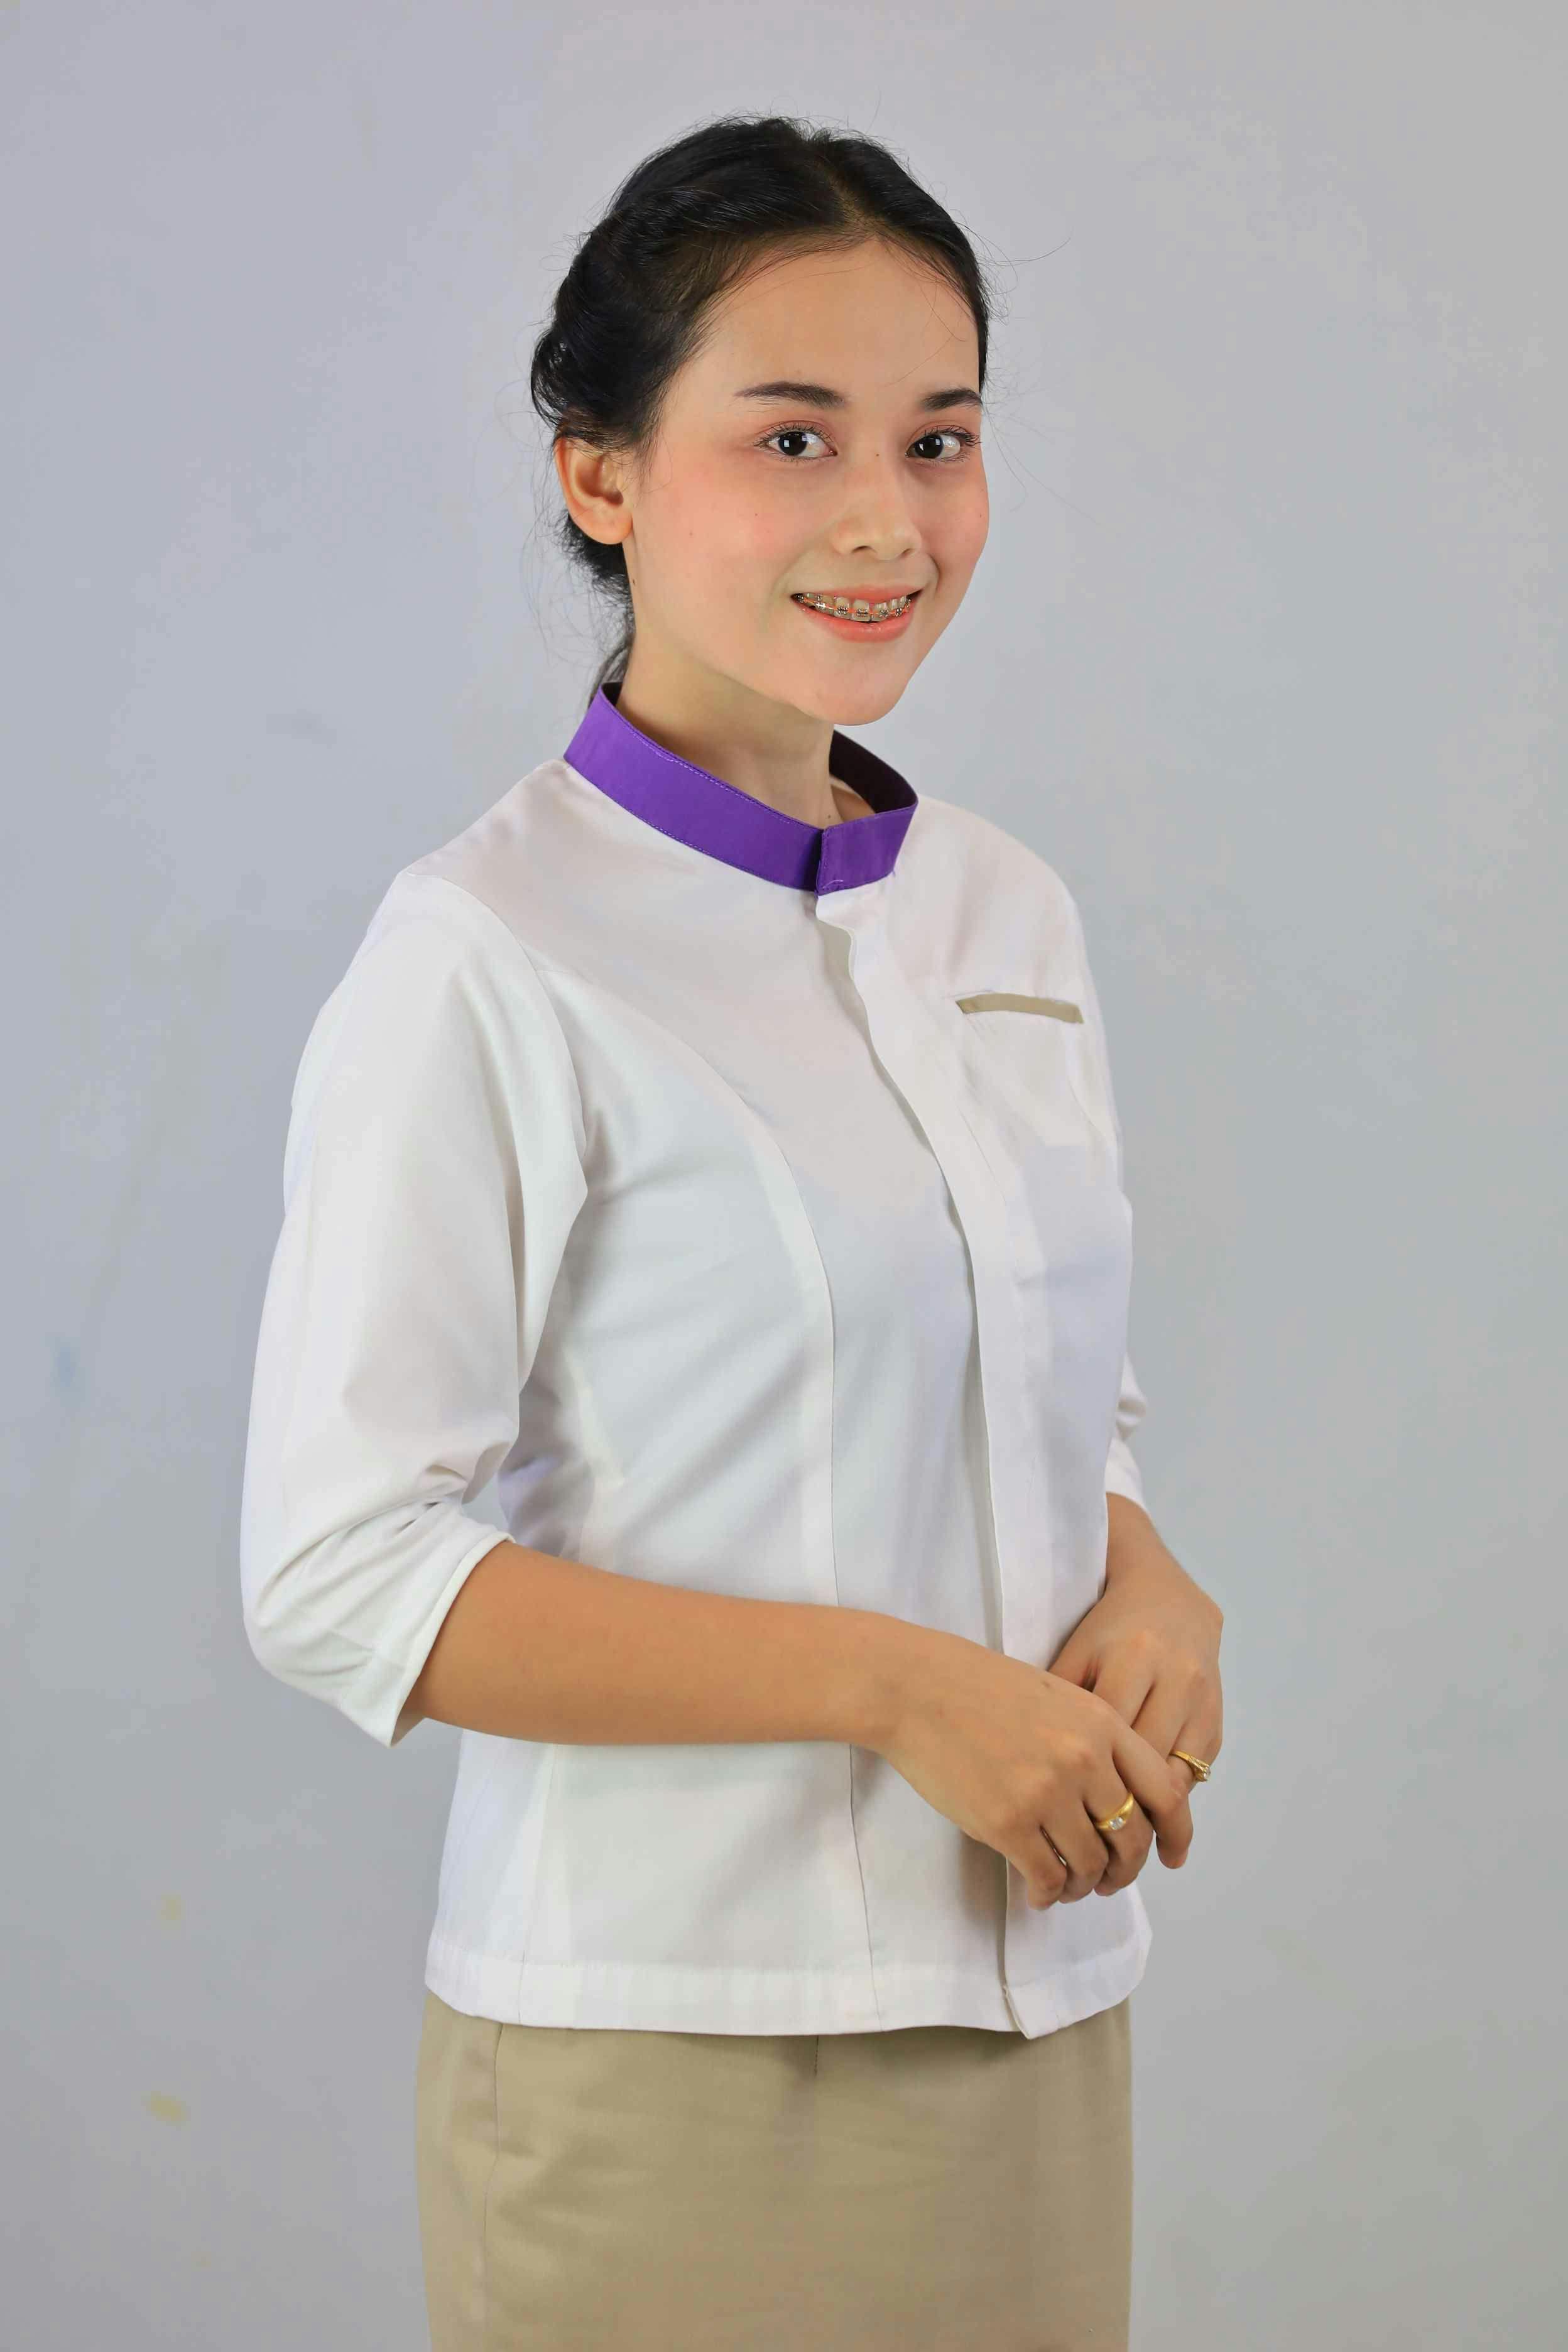 Teacher Chanikai Thongbai